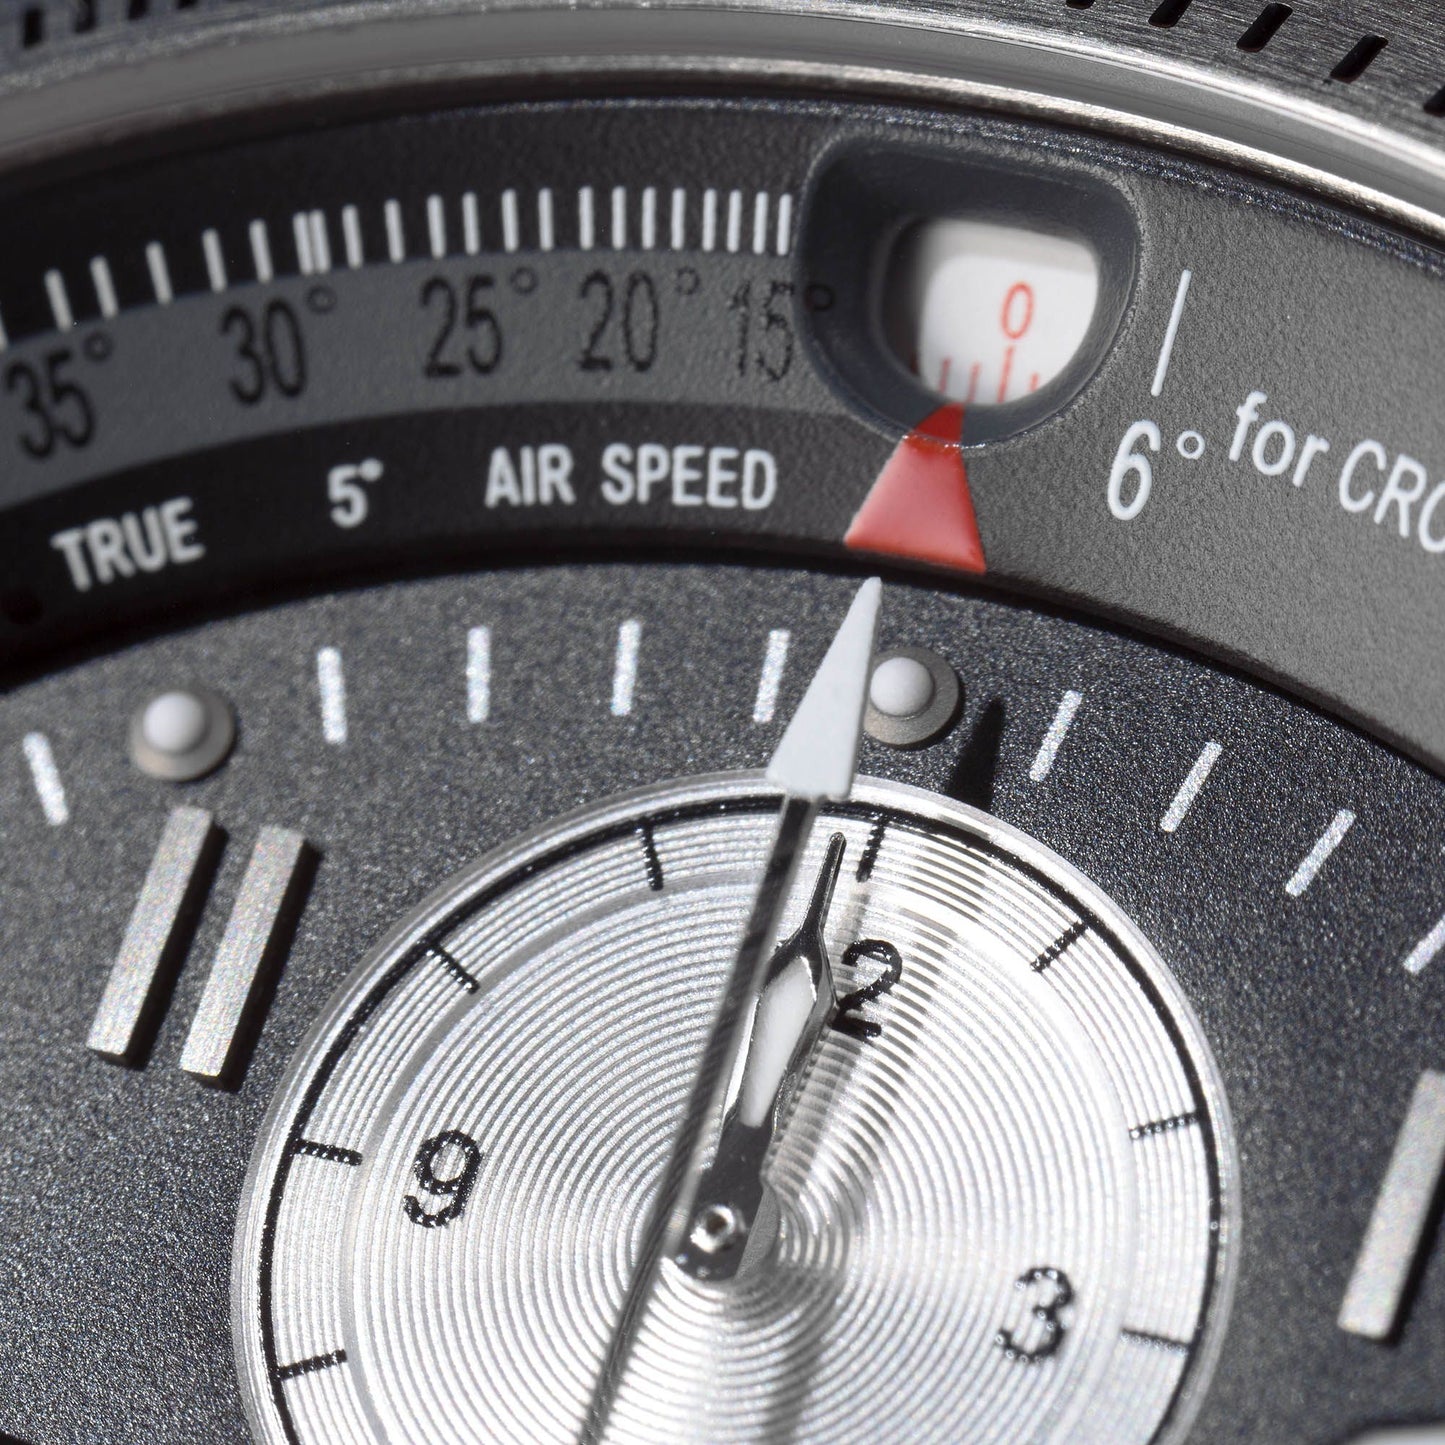 Khaki Automatic Chronometer X-Wind (Silver/Brown) | Hamilton | Luby 